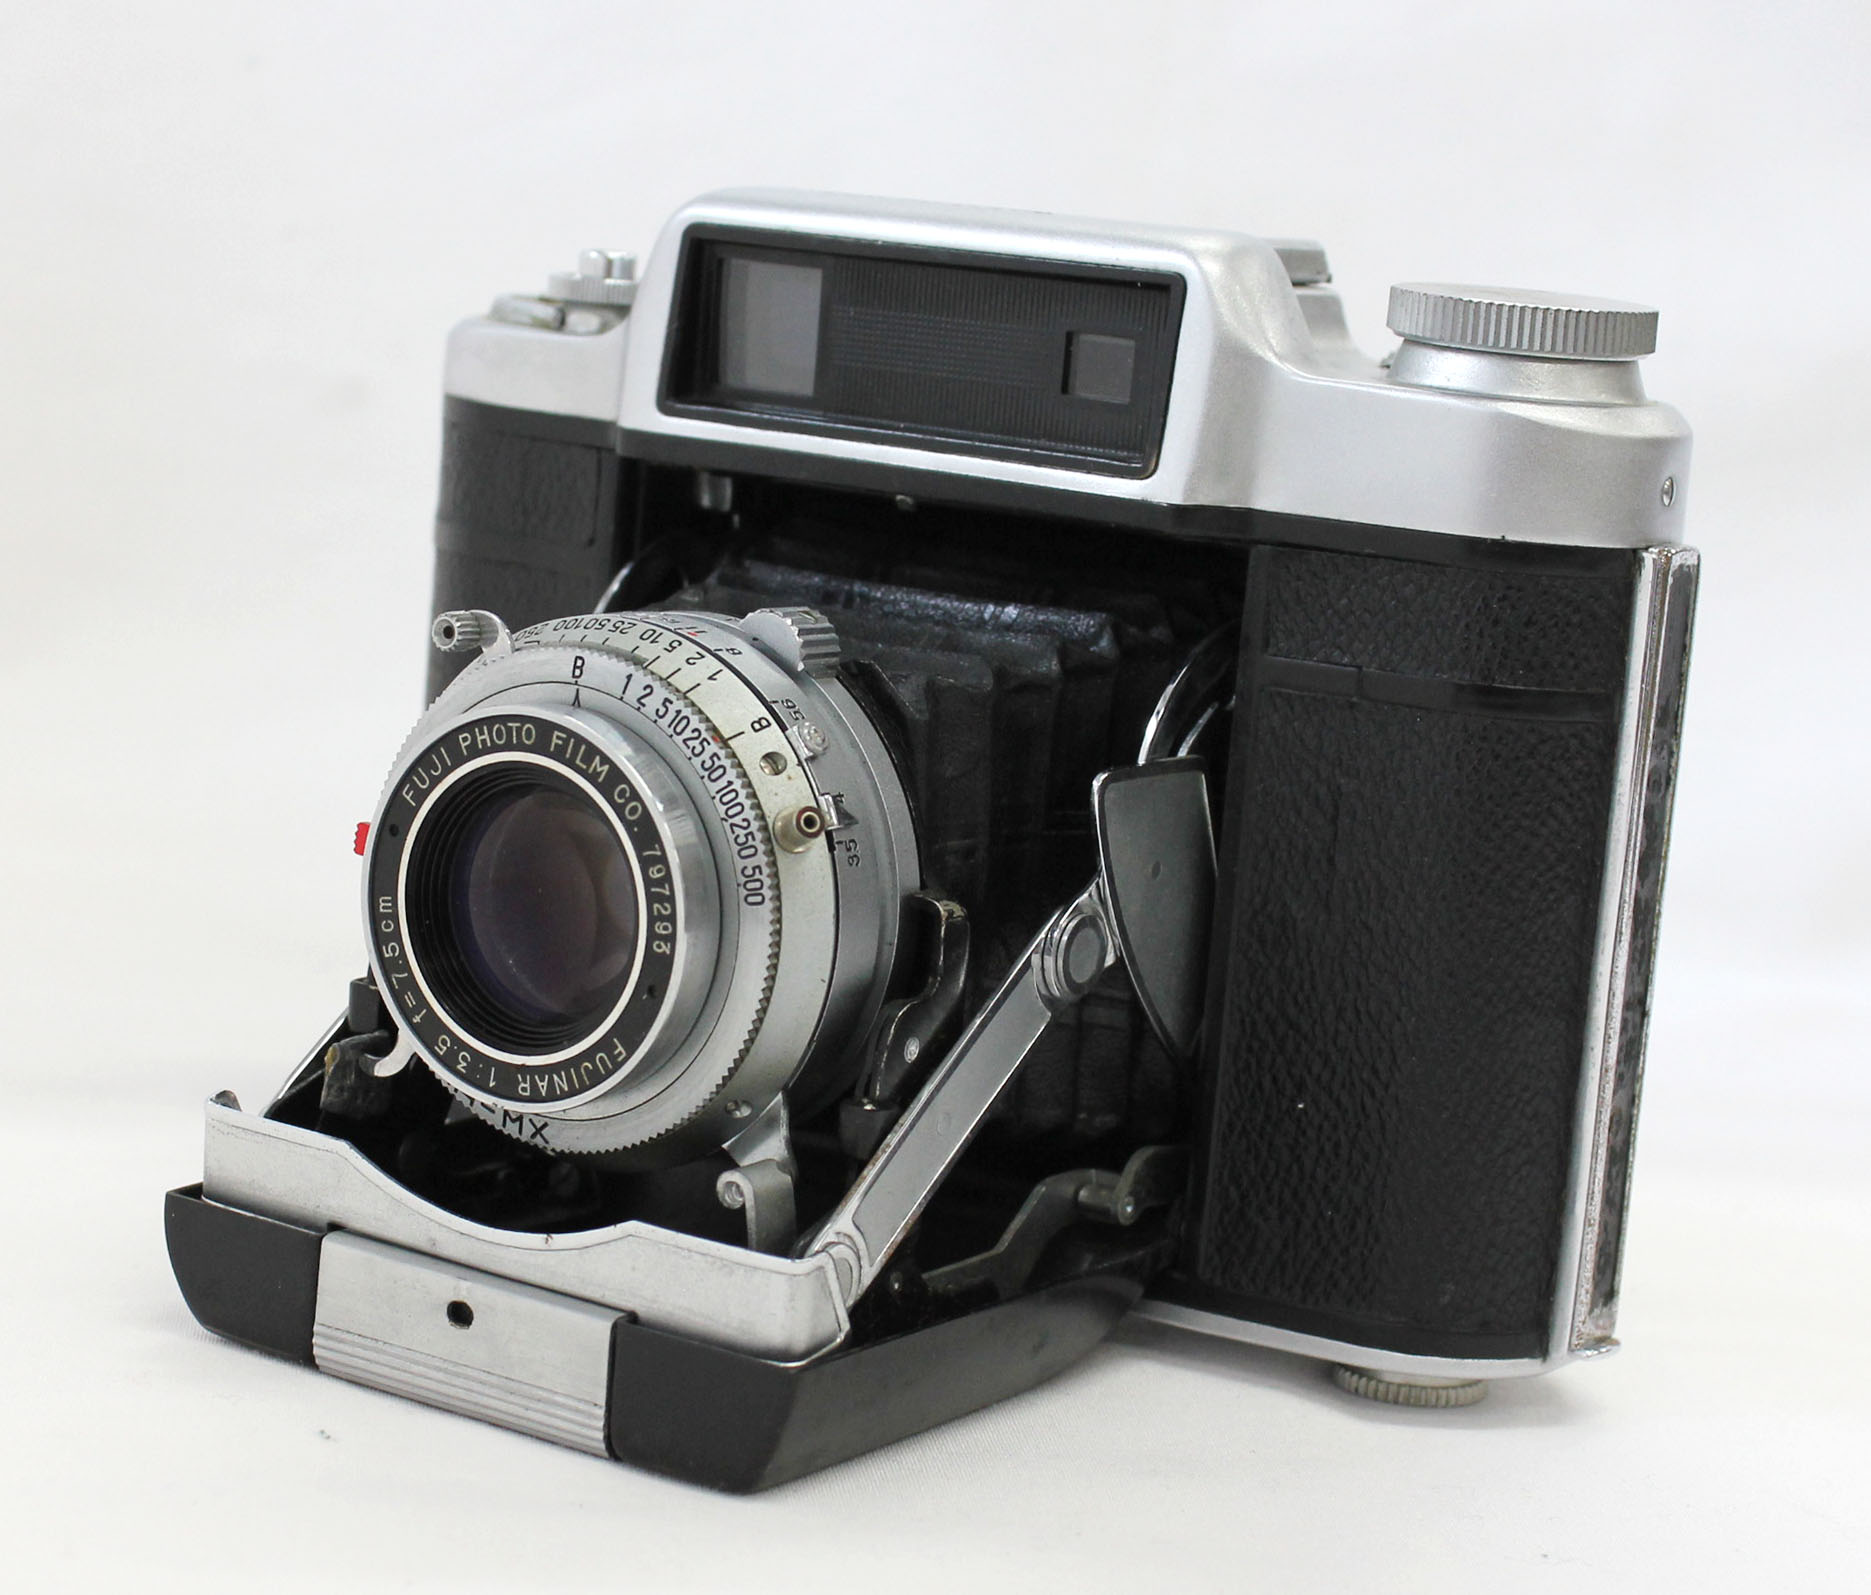 Fuji Super Fujica-6 Six 6x6 Medium Format Film Camera with Fujinar 75mm F/3.5 from Japan